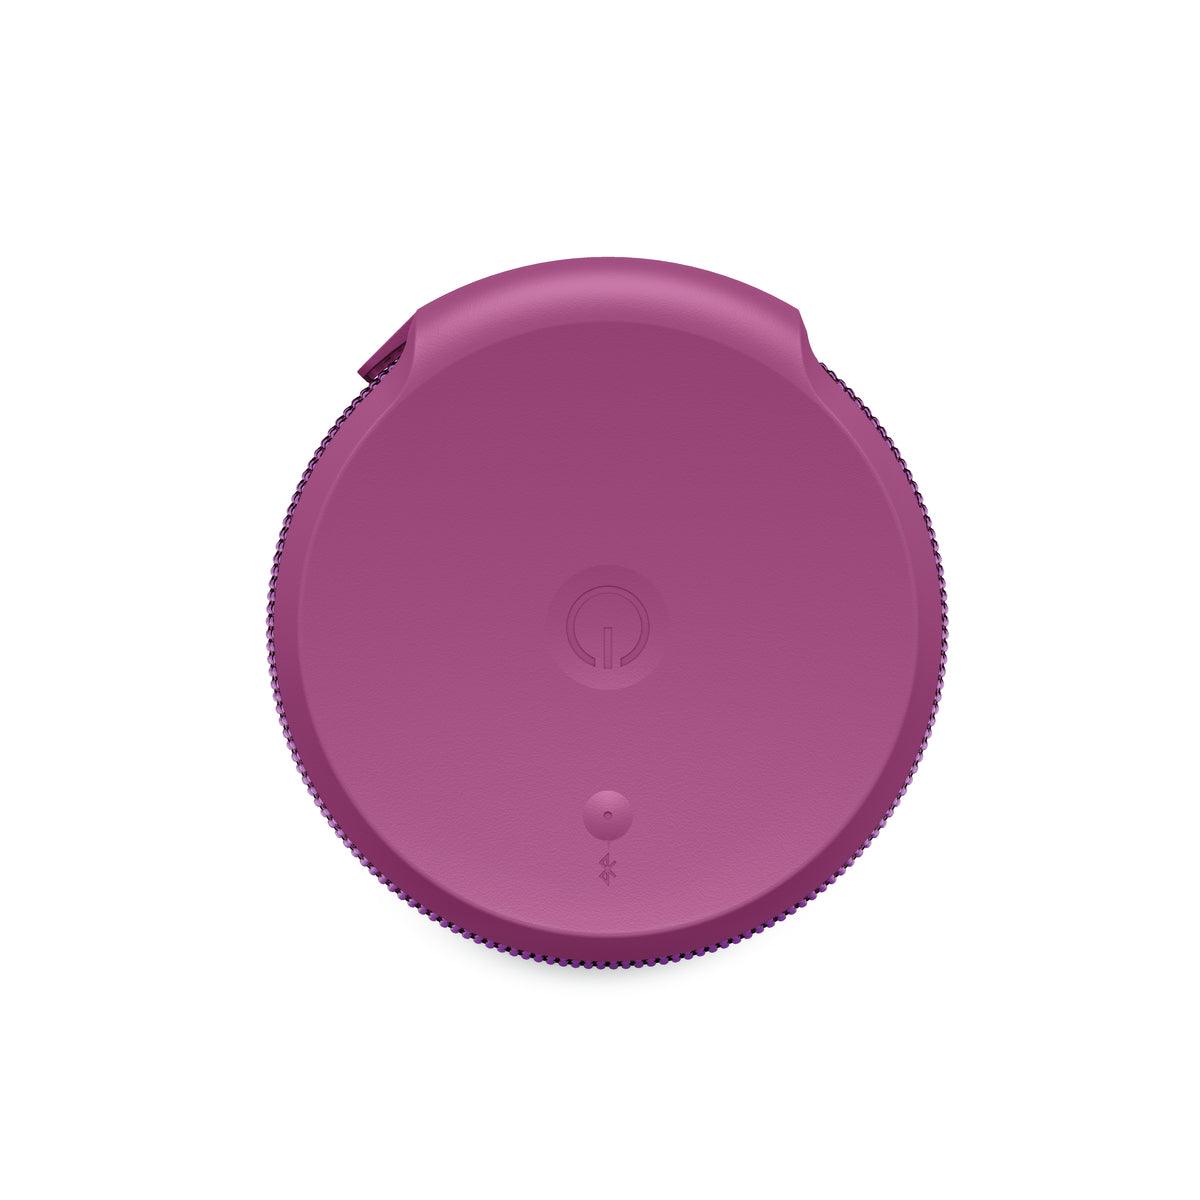 Logitech Ultimate Ears MEGABOOM - speaker - for portable use - wireless